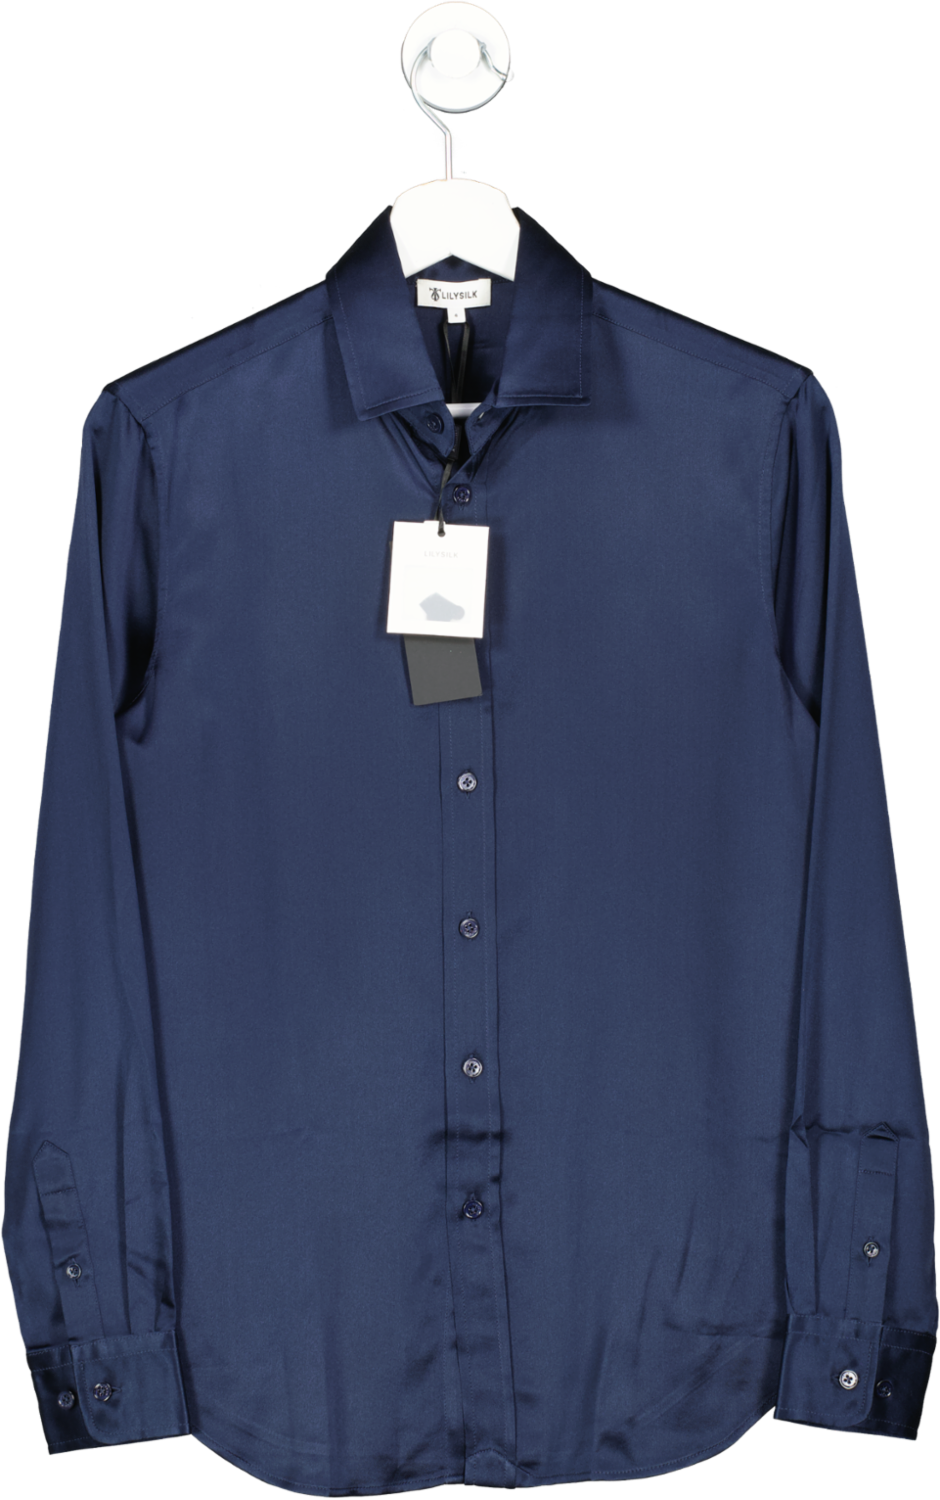 LILYSILK Blue Navy Bue 100% Mulberry Silk Tailored Shirt Bnwt UK 8